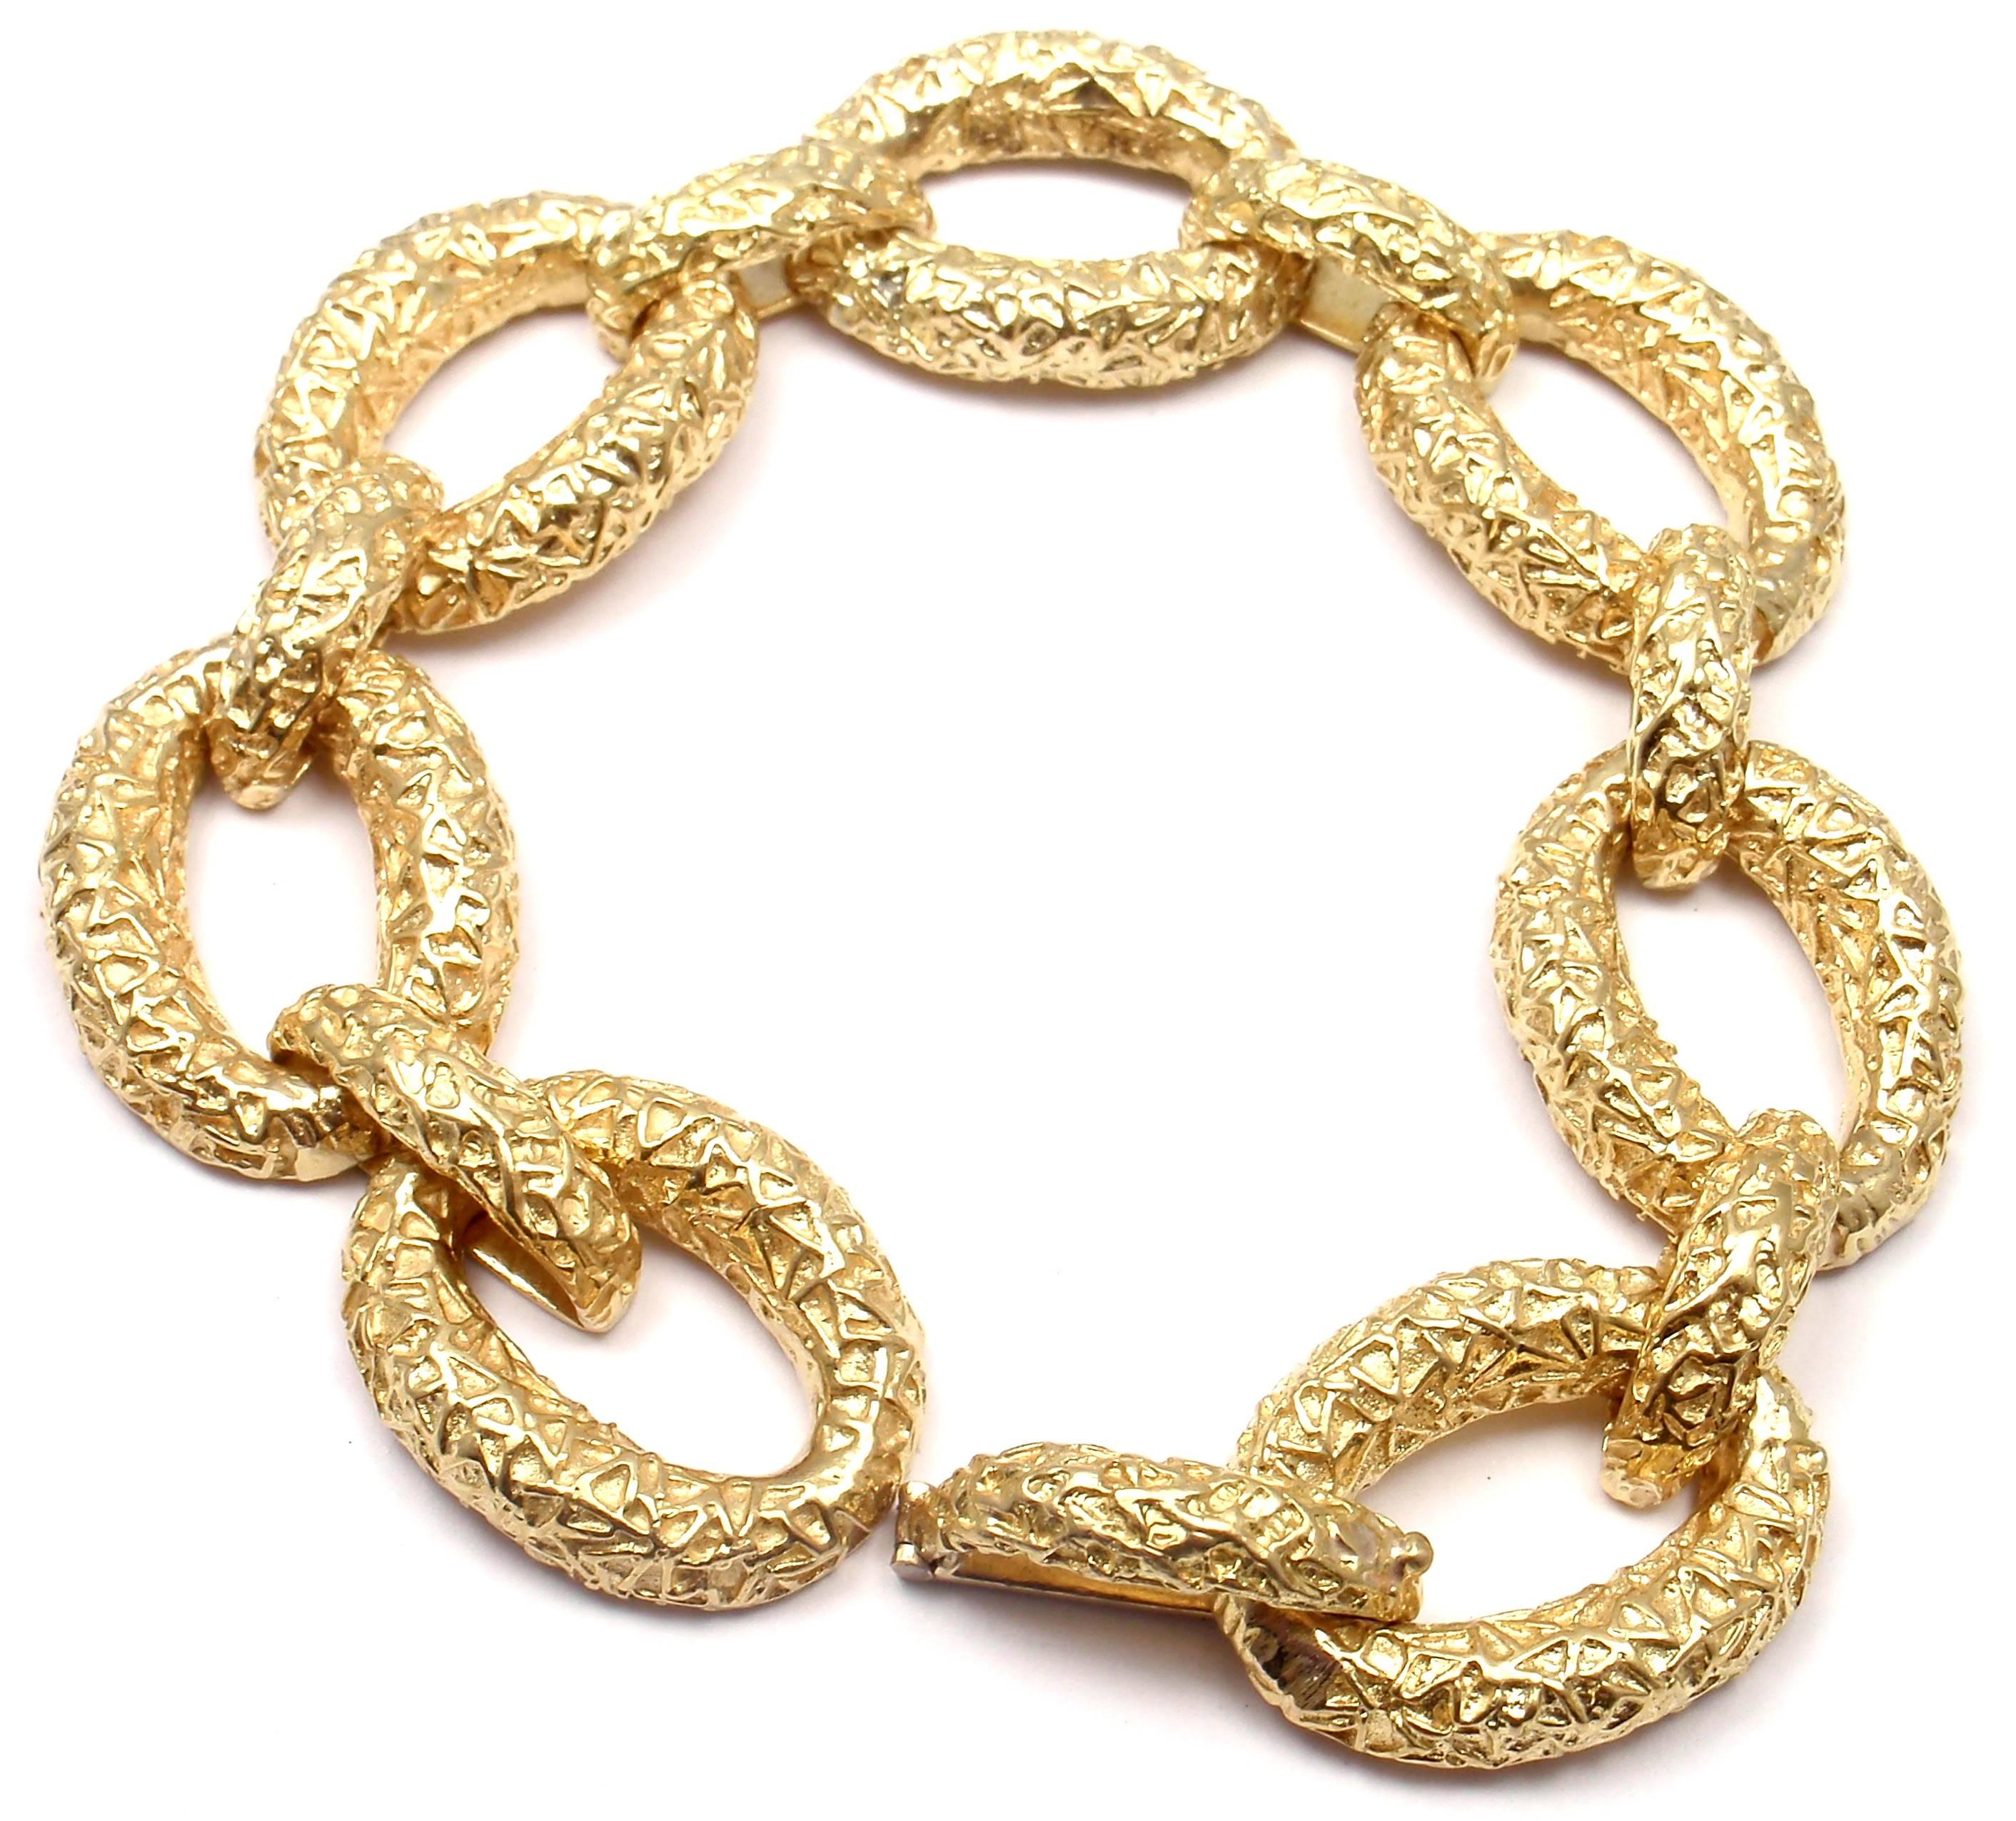 18k Yellow Gold Textured Link Bracelet by Van Cleef & Arpels.

Details:
Length: 8